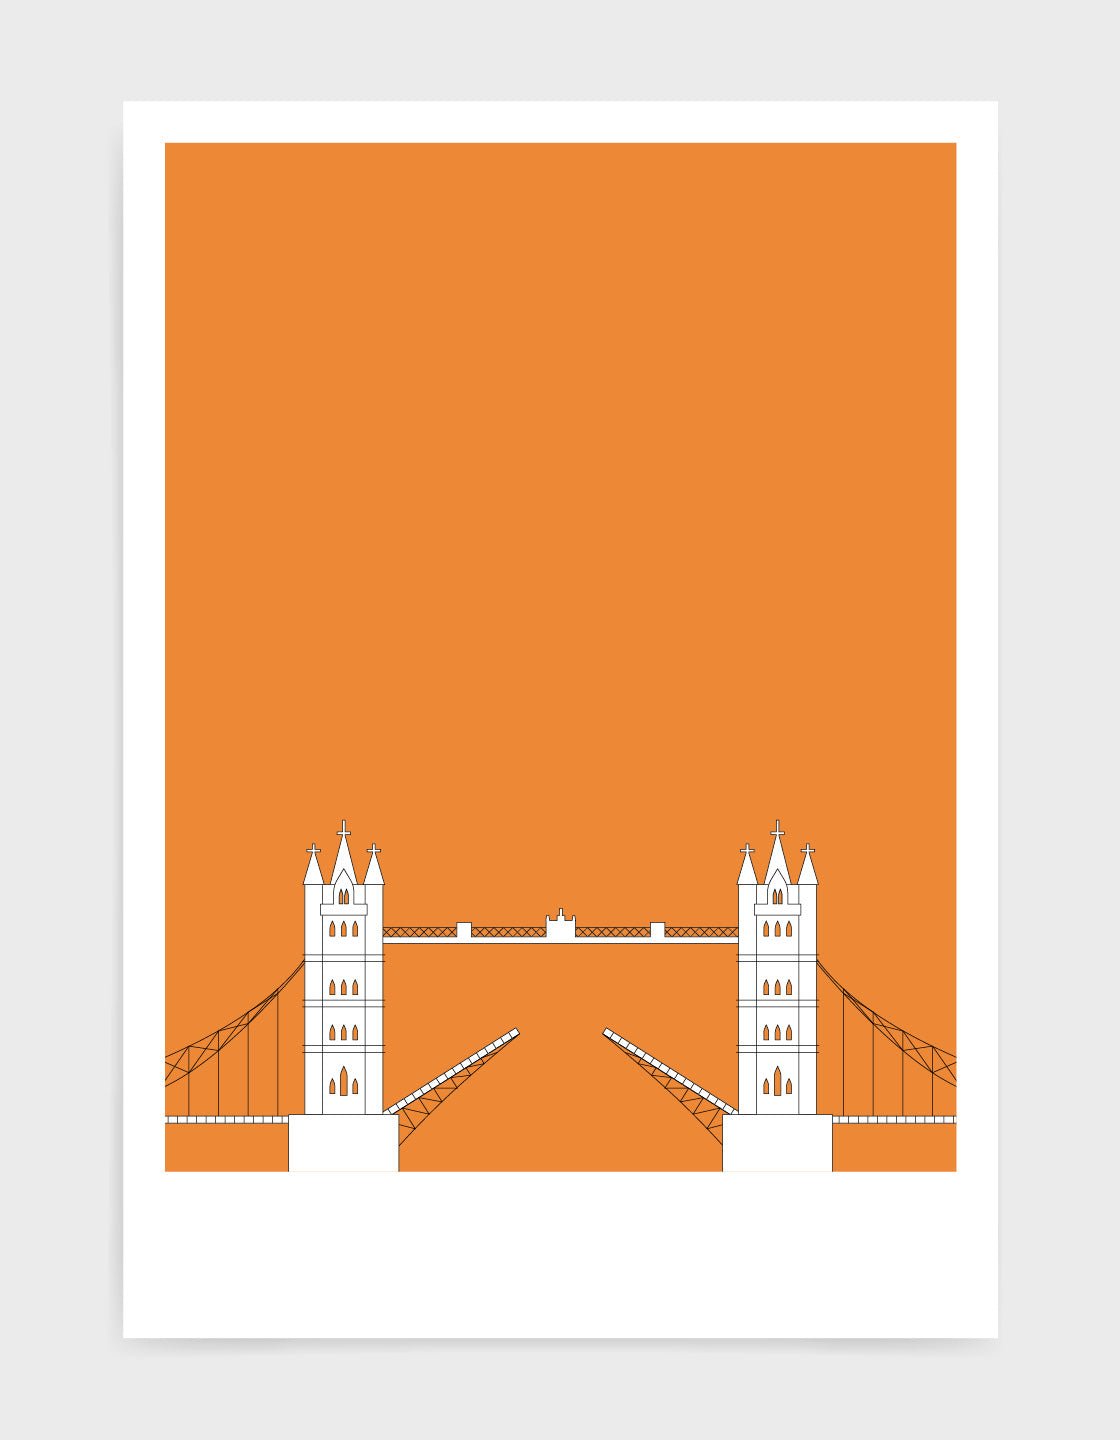 illustration of tower bridge in white against a bright orange background